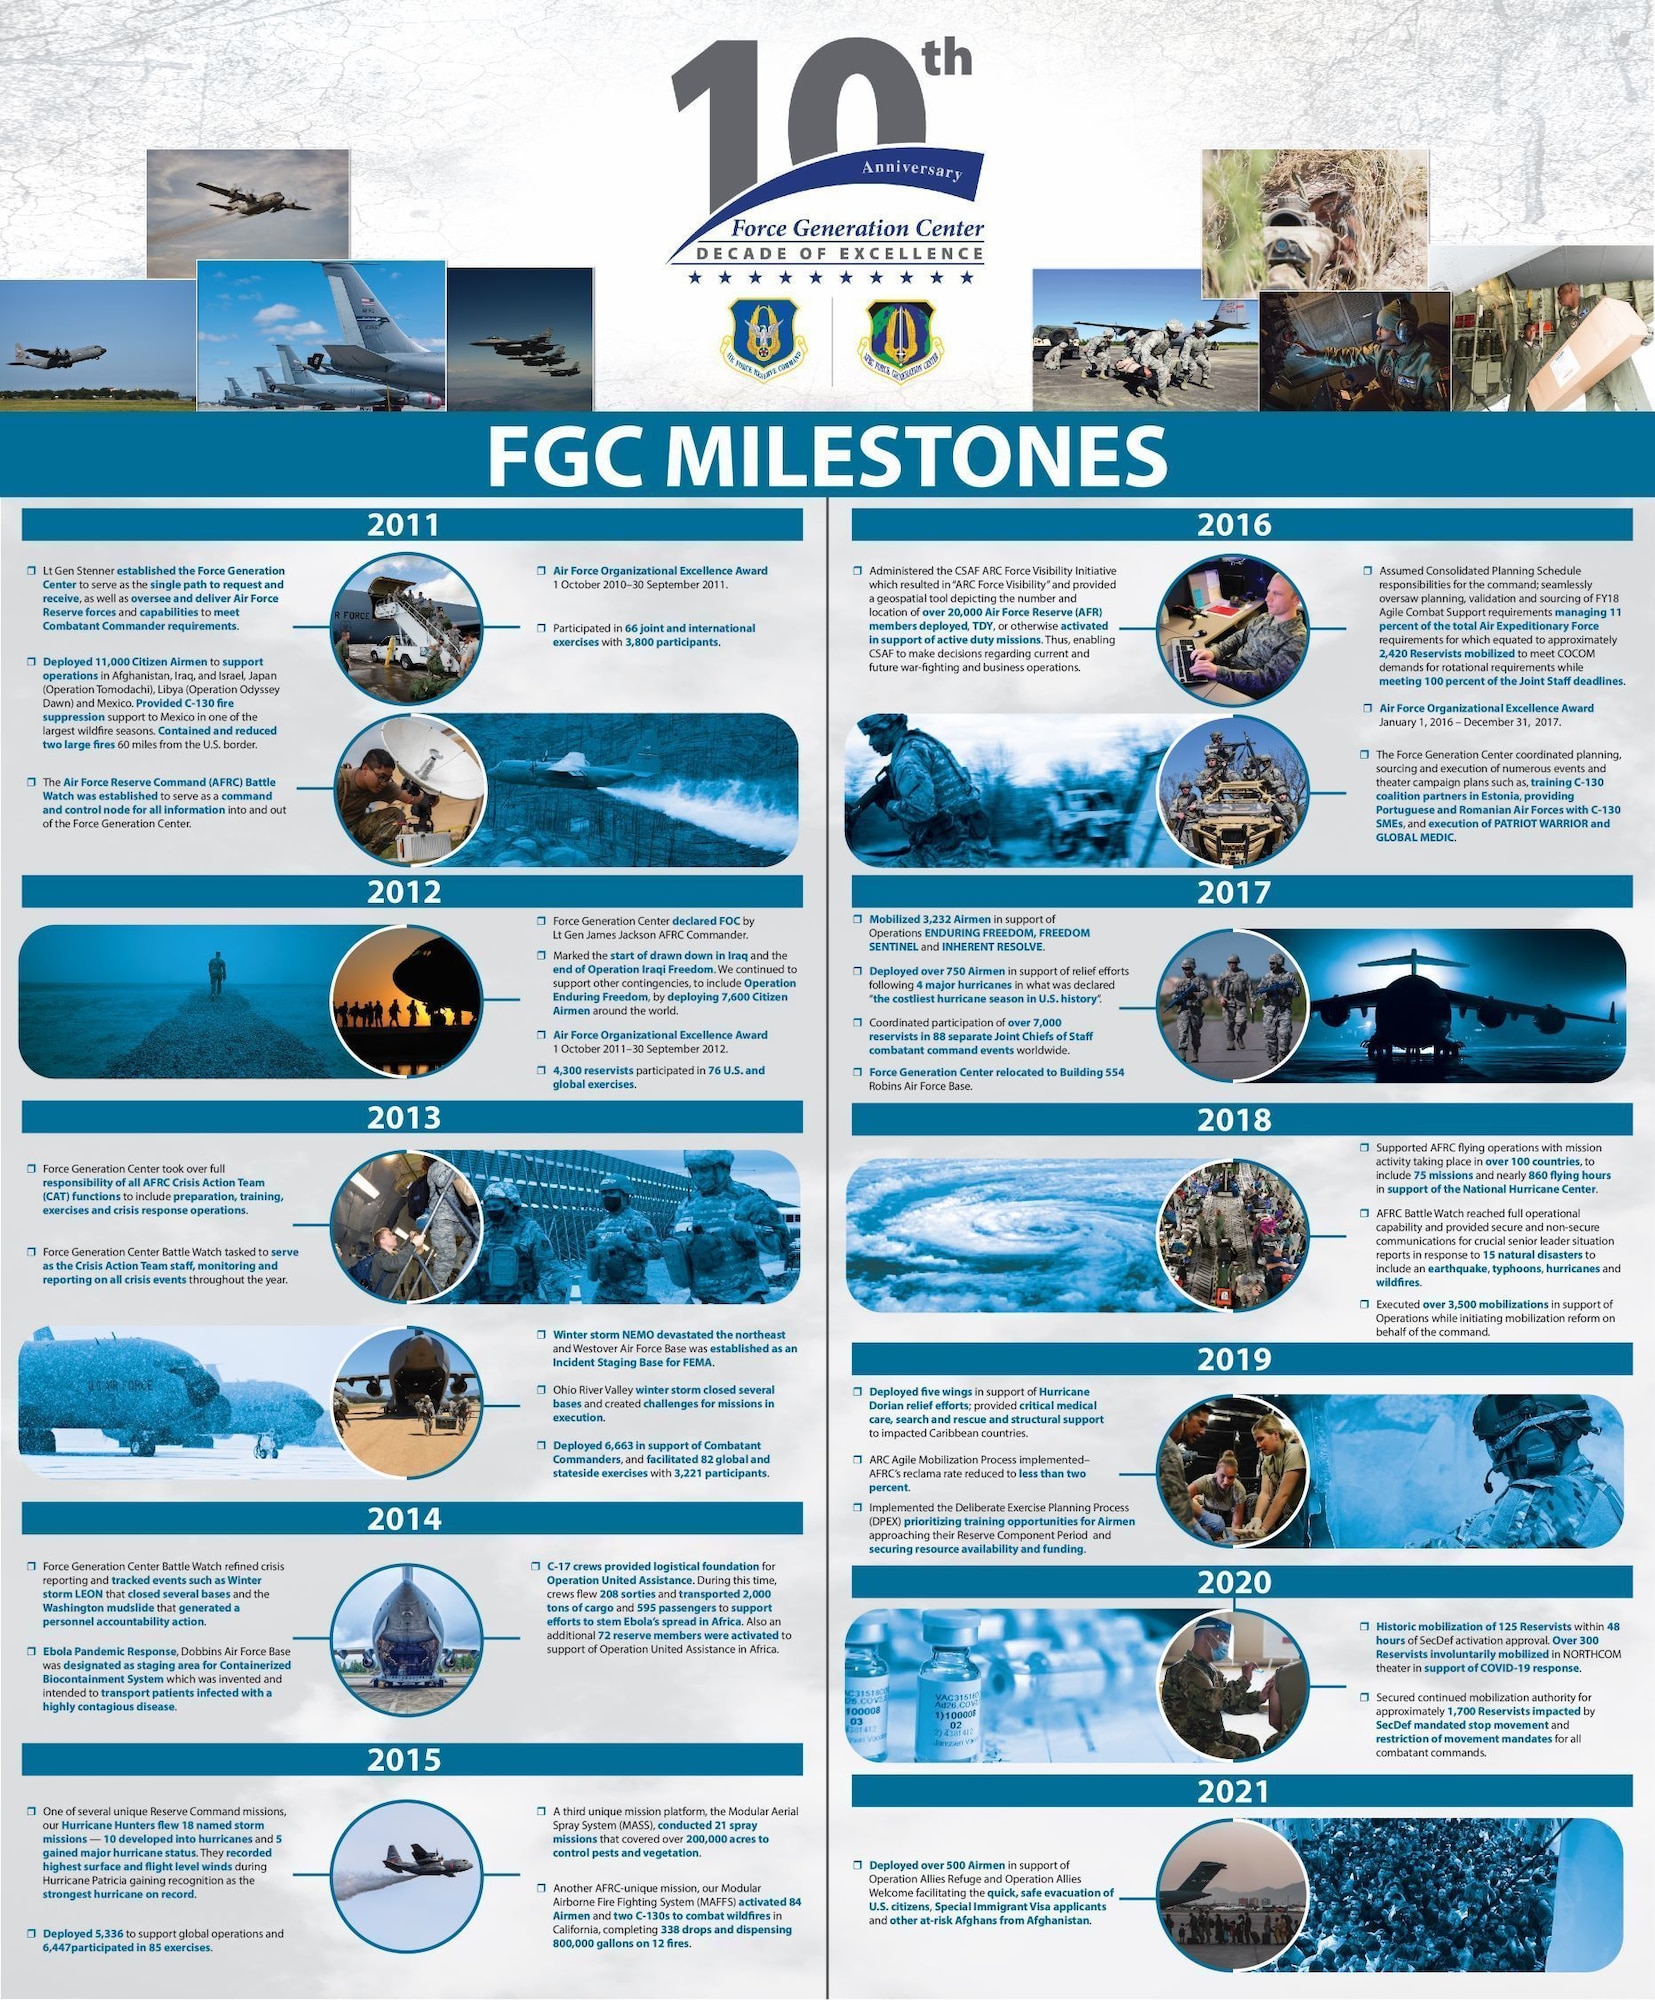 Force Generation Center 10th anniversary milestones infographic.